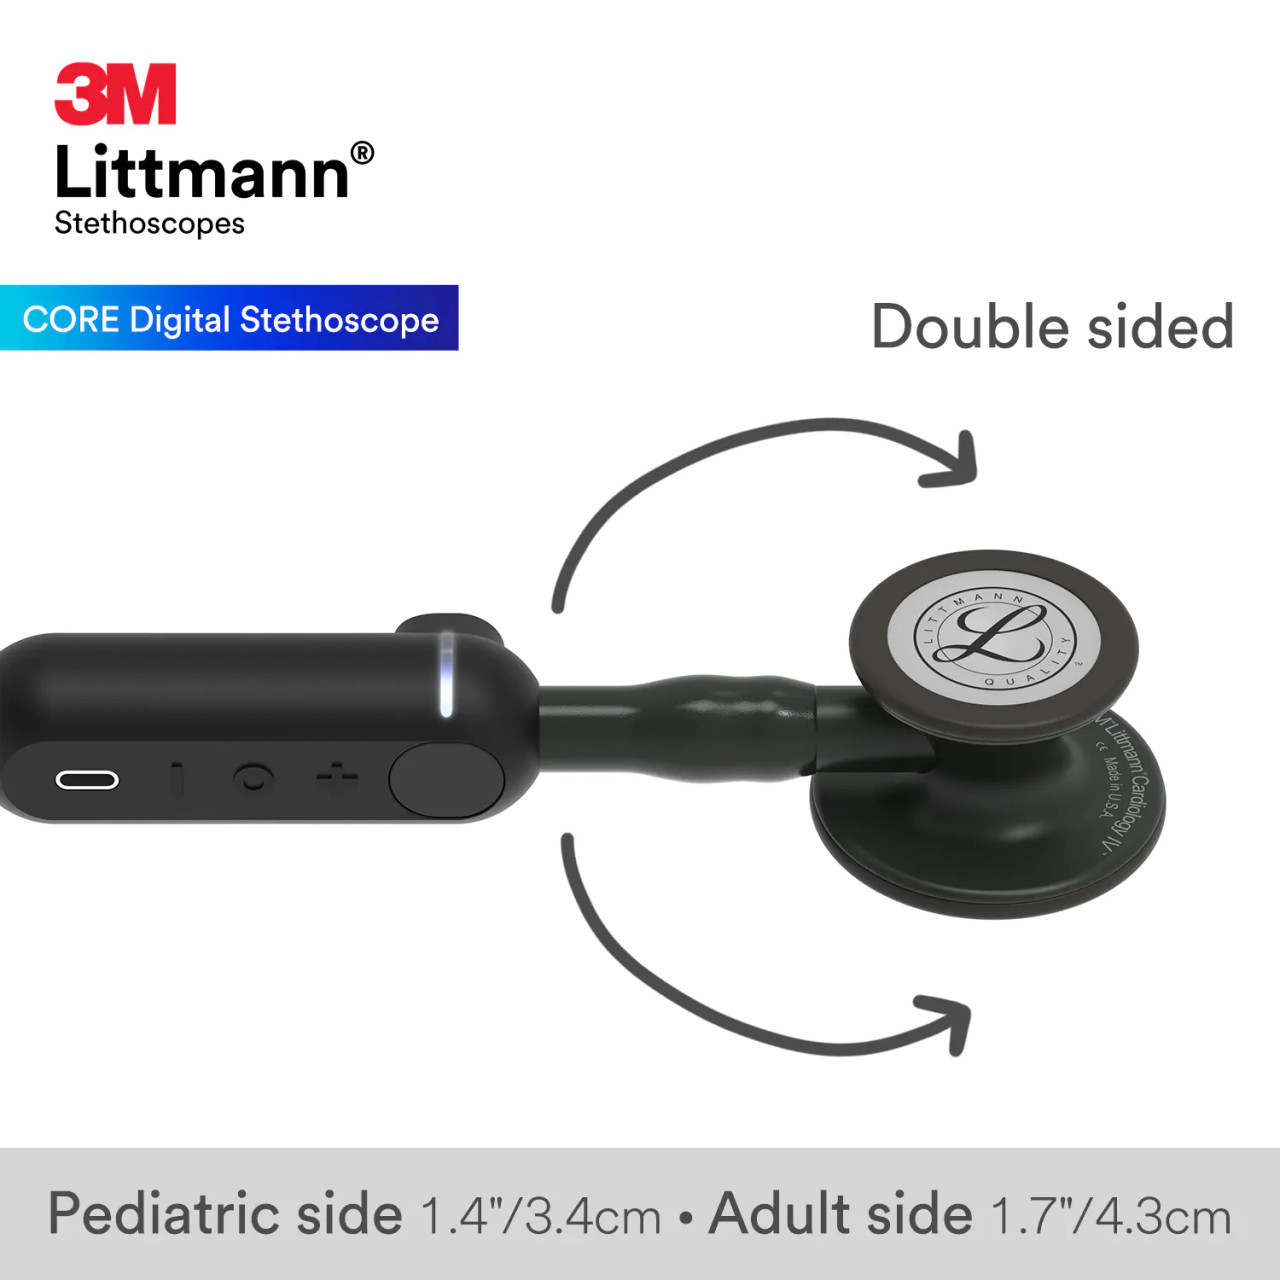 3M Littmann CORE Digital Stethoscope, Black, 8480